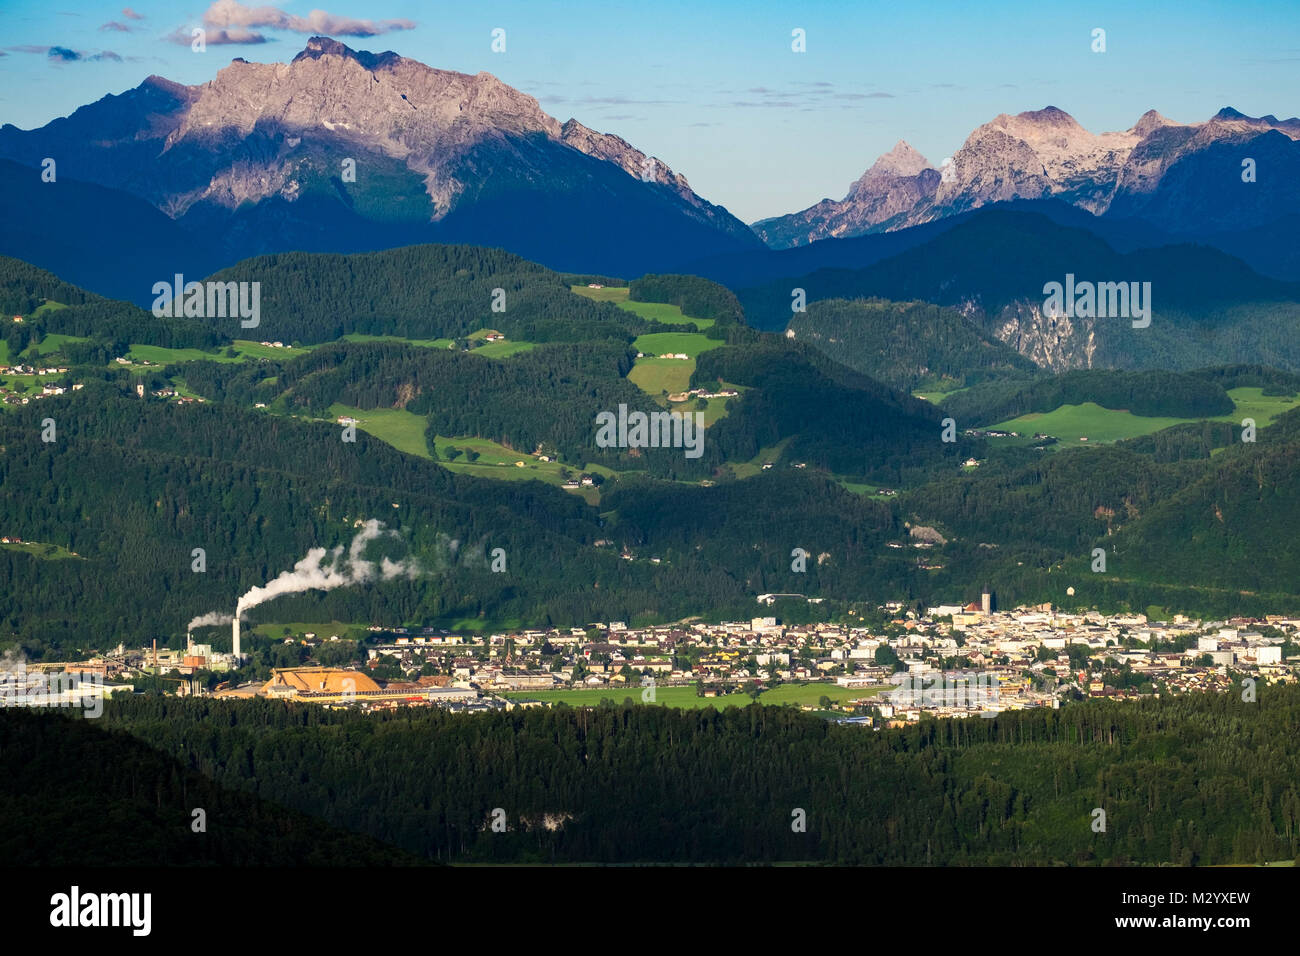 Aerial view of Hallein in Austria, Europe Stock Photo